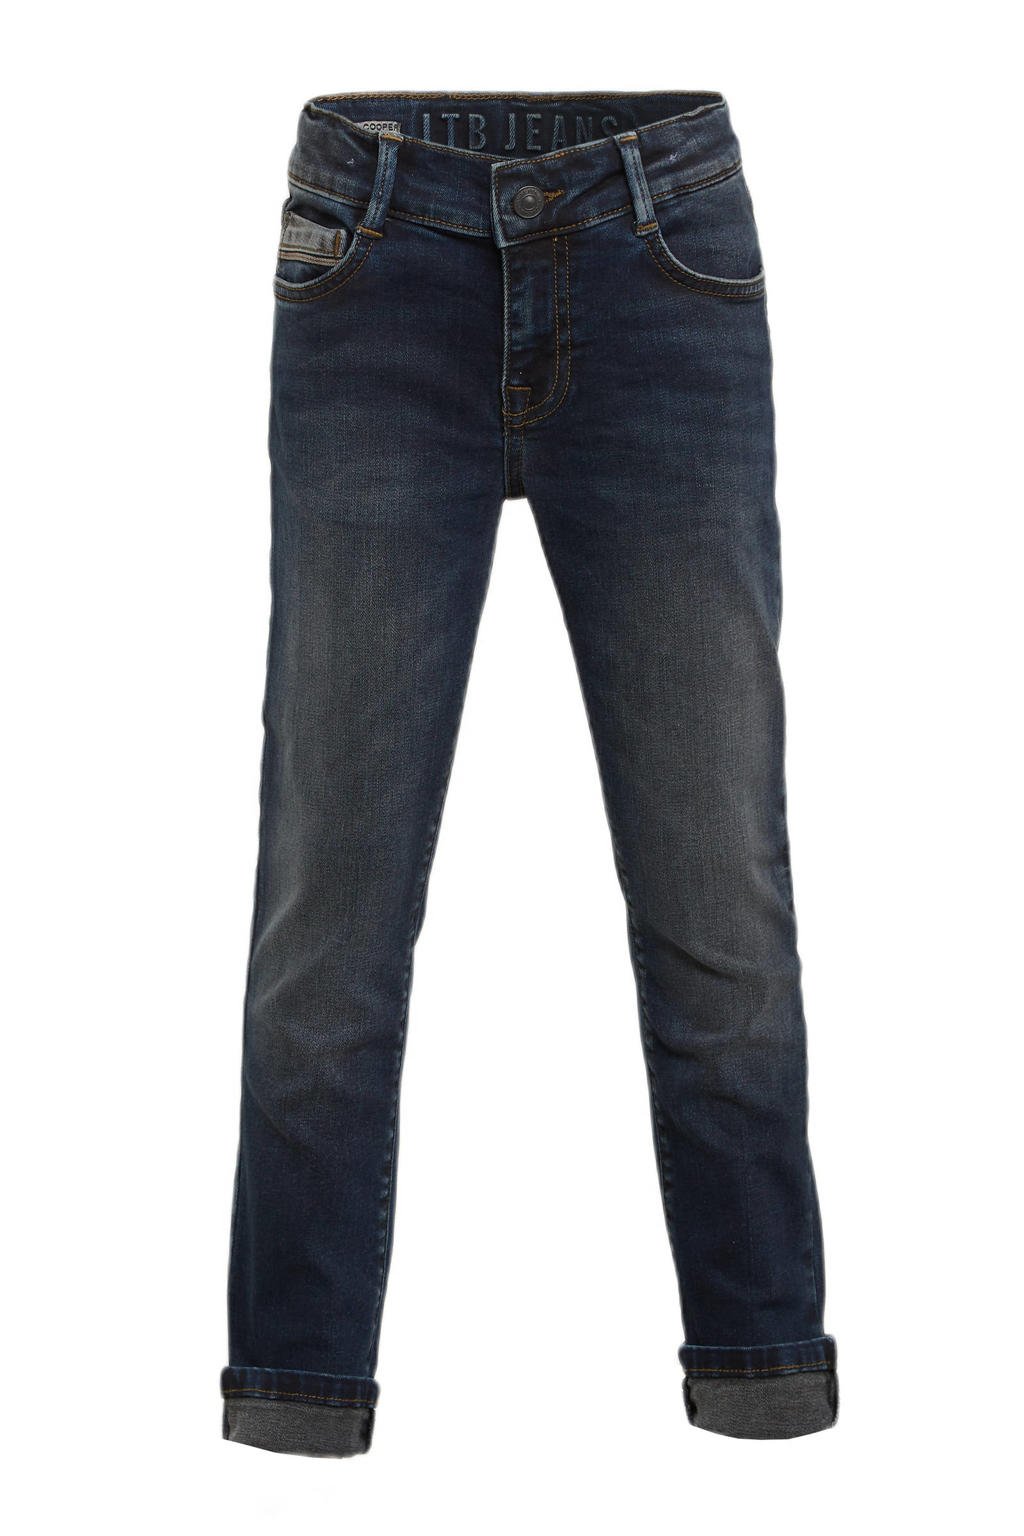 LTB slim fit jeans New Cooper jubi wash